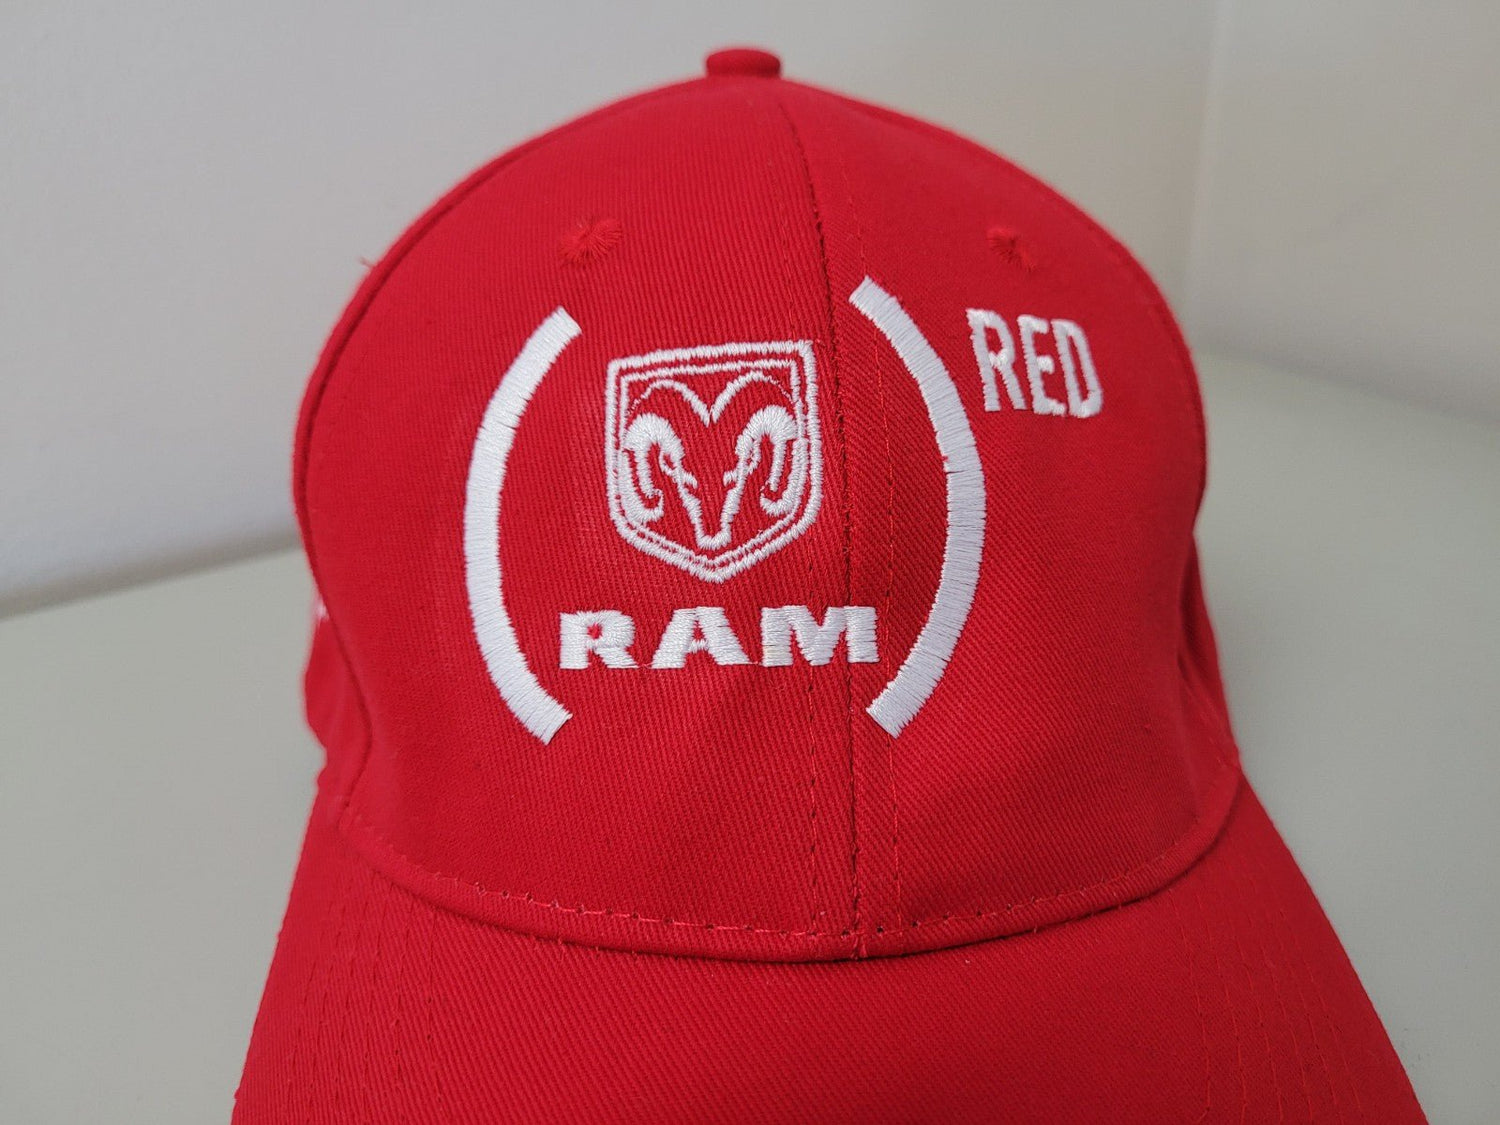 RAM (red) Edition Truck Baseball Cap - ParkersGear.com Hats